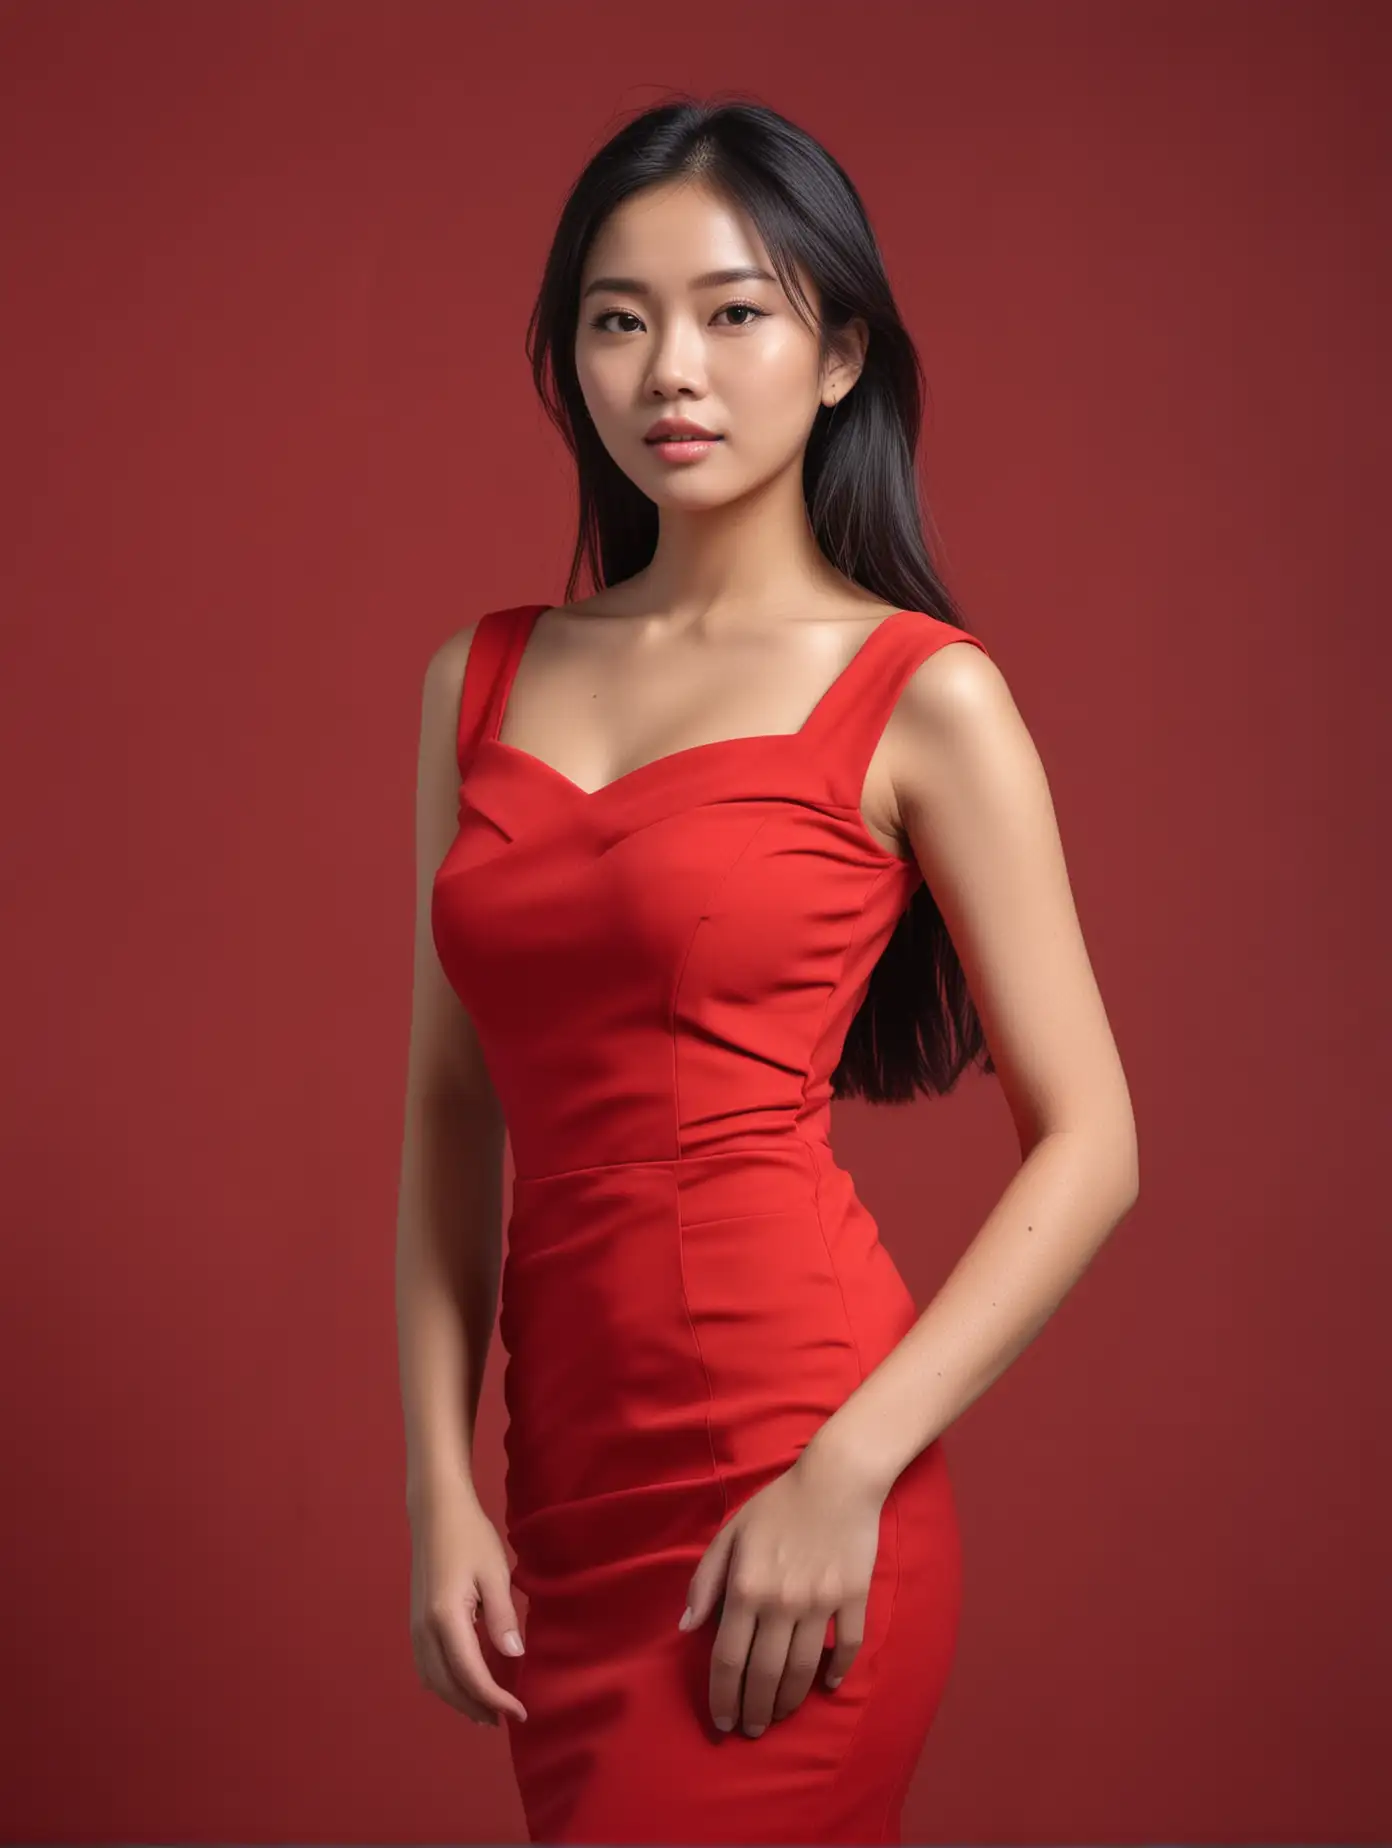 Vietnamese Female Model in Red Dress Against Monochromatic Background